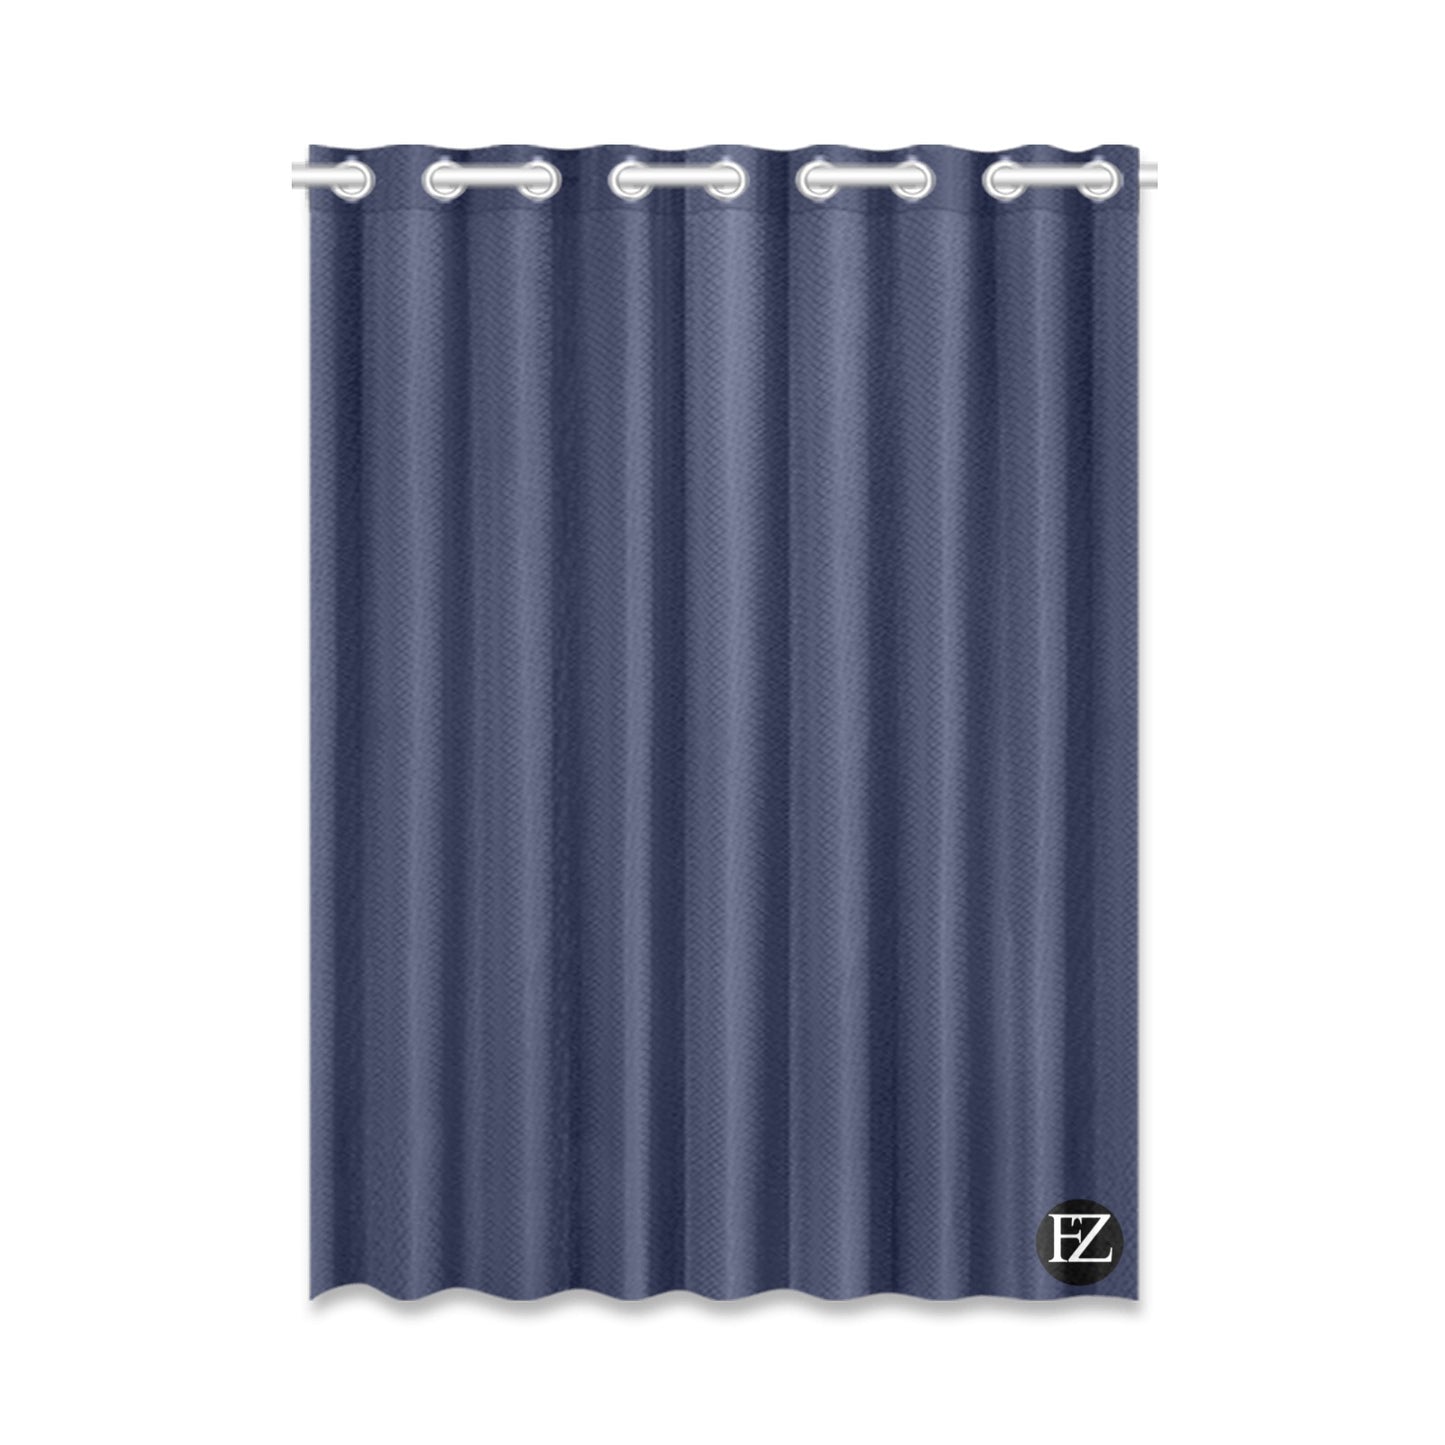 fz window curtain one size / fz room curtains - dark blue window curtain 52" x 72" (one piece)